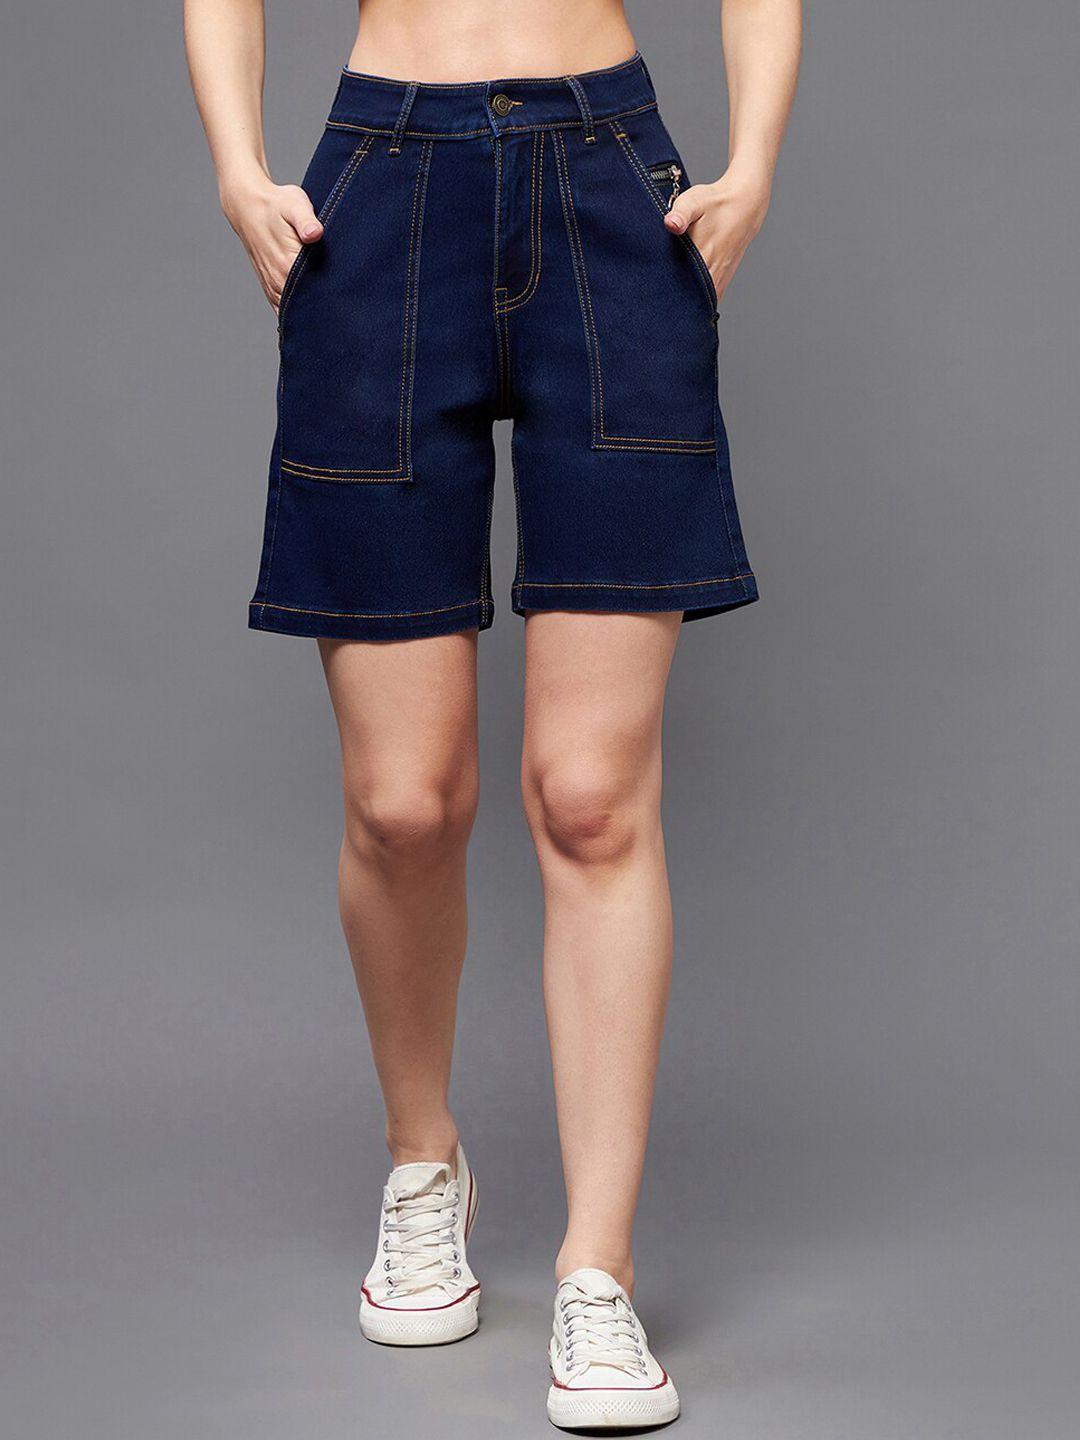 dressberry women navy blue high-rise denim shorts